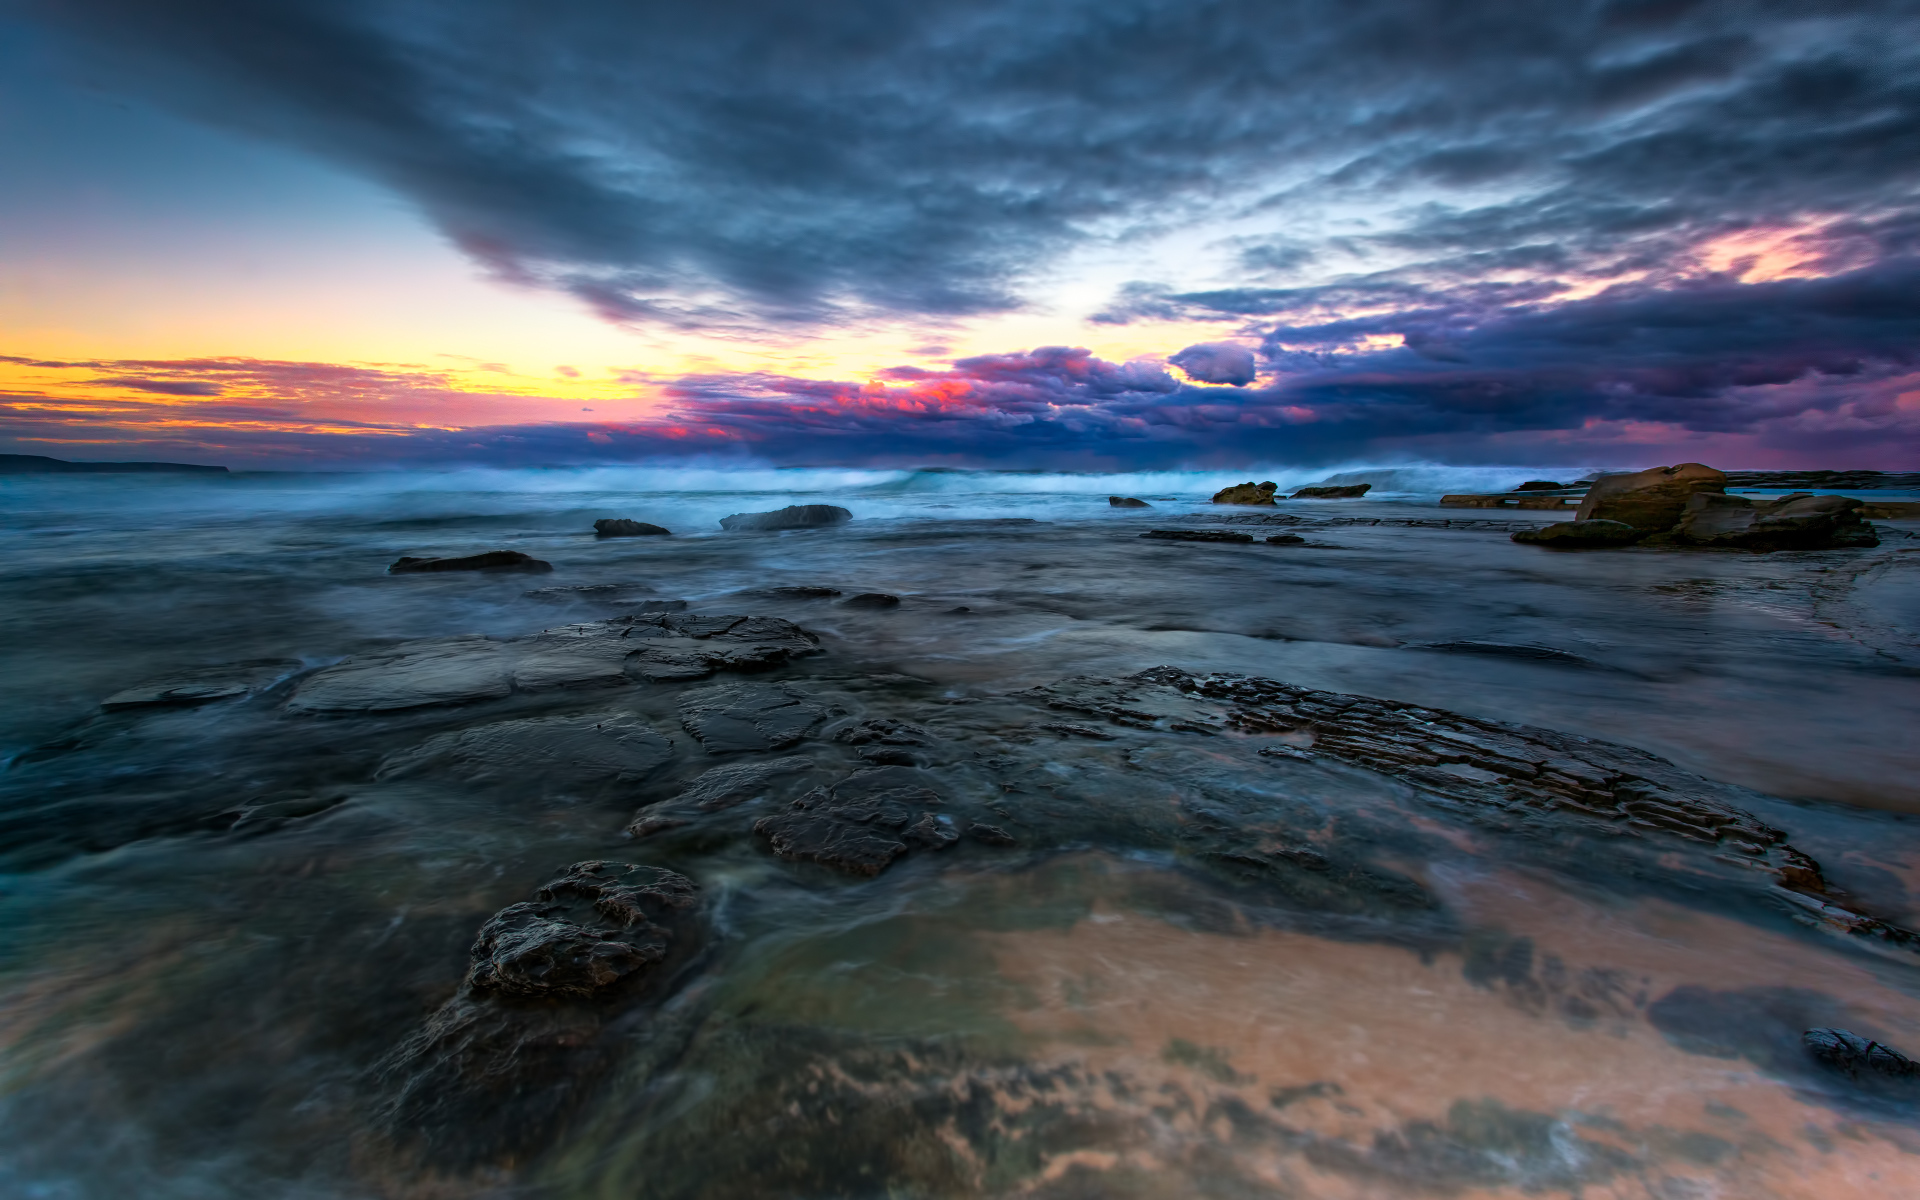 Whale Beach, New South Wales, Australia